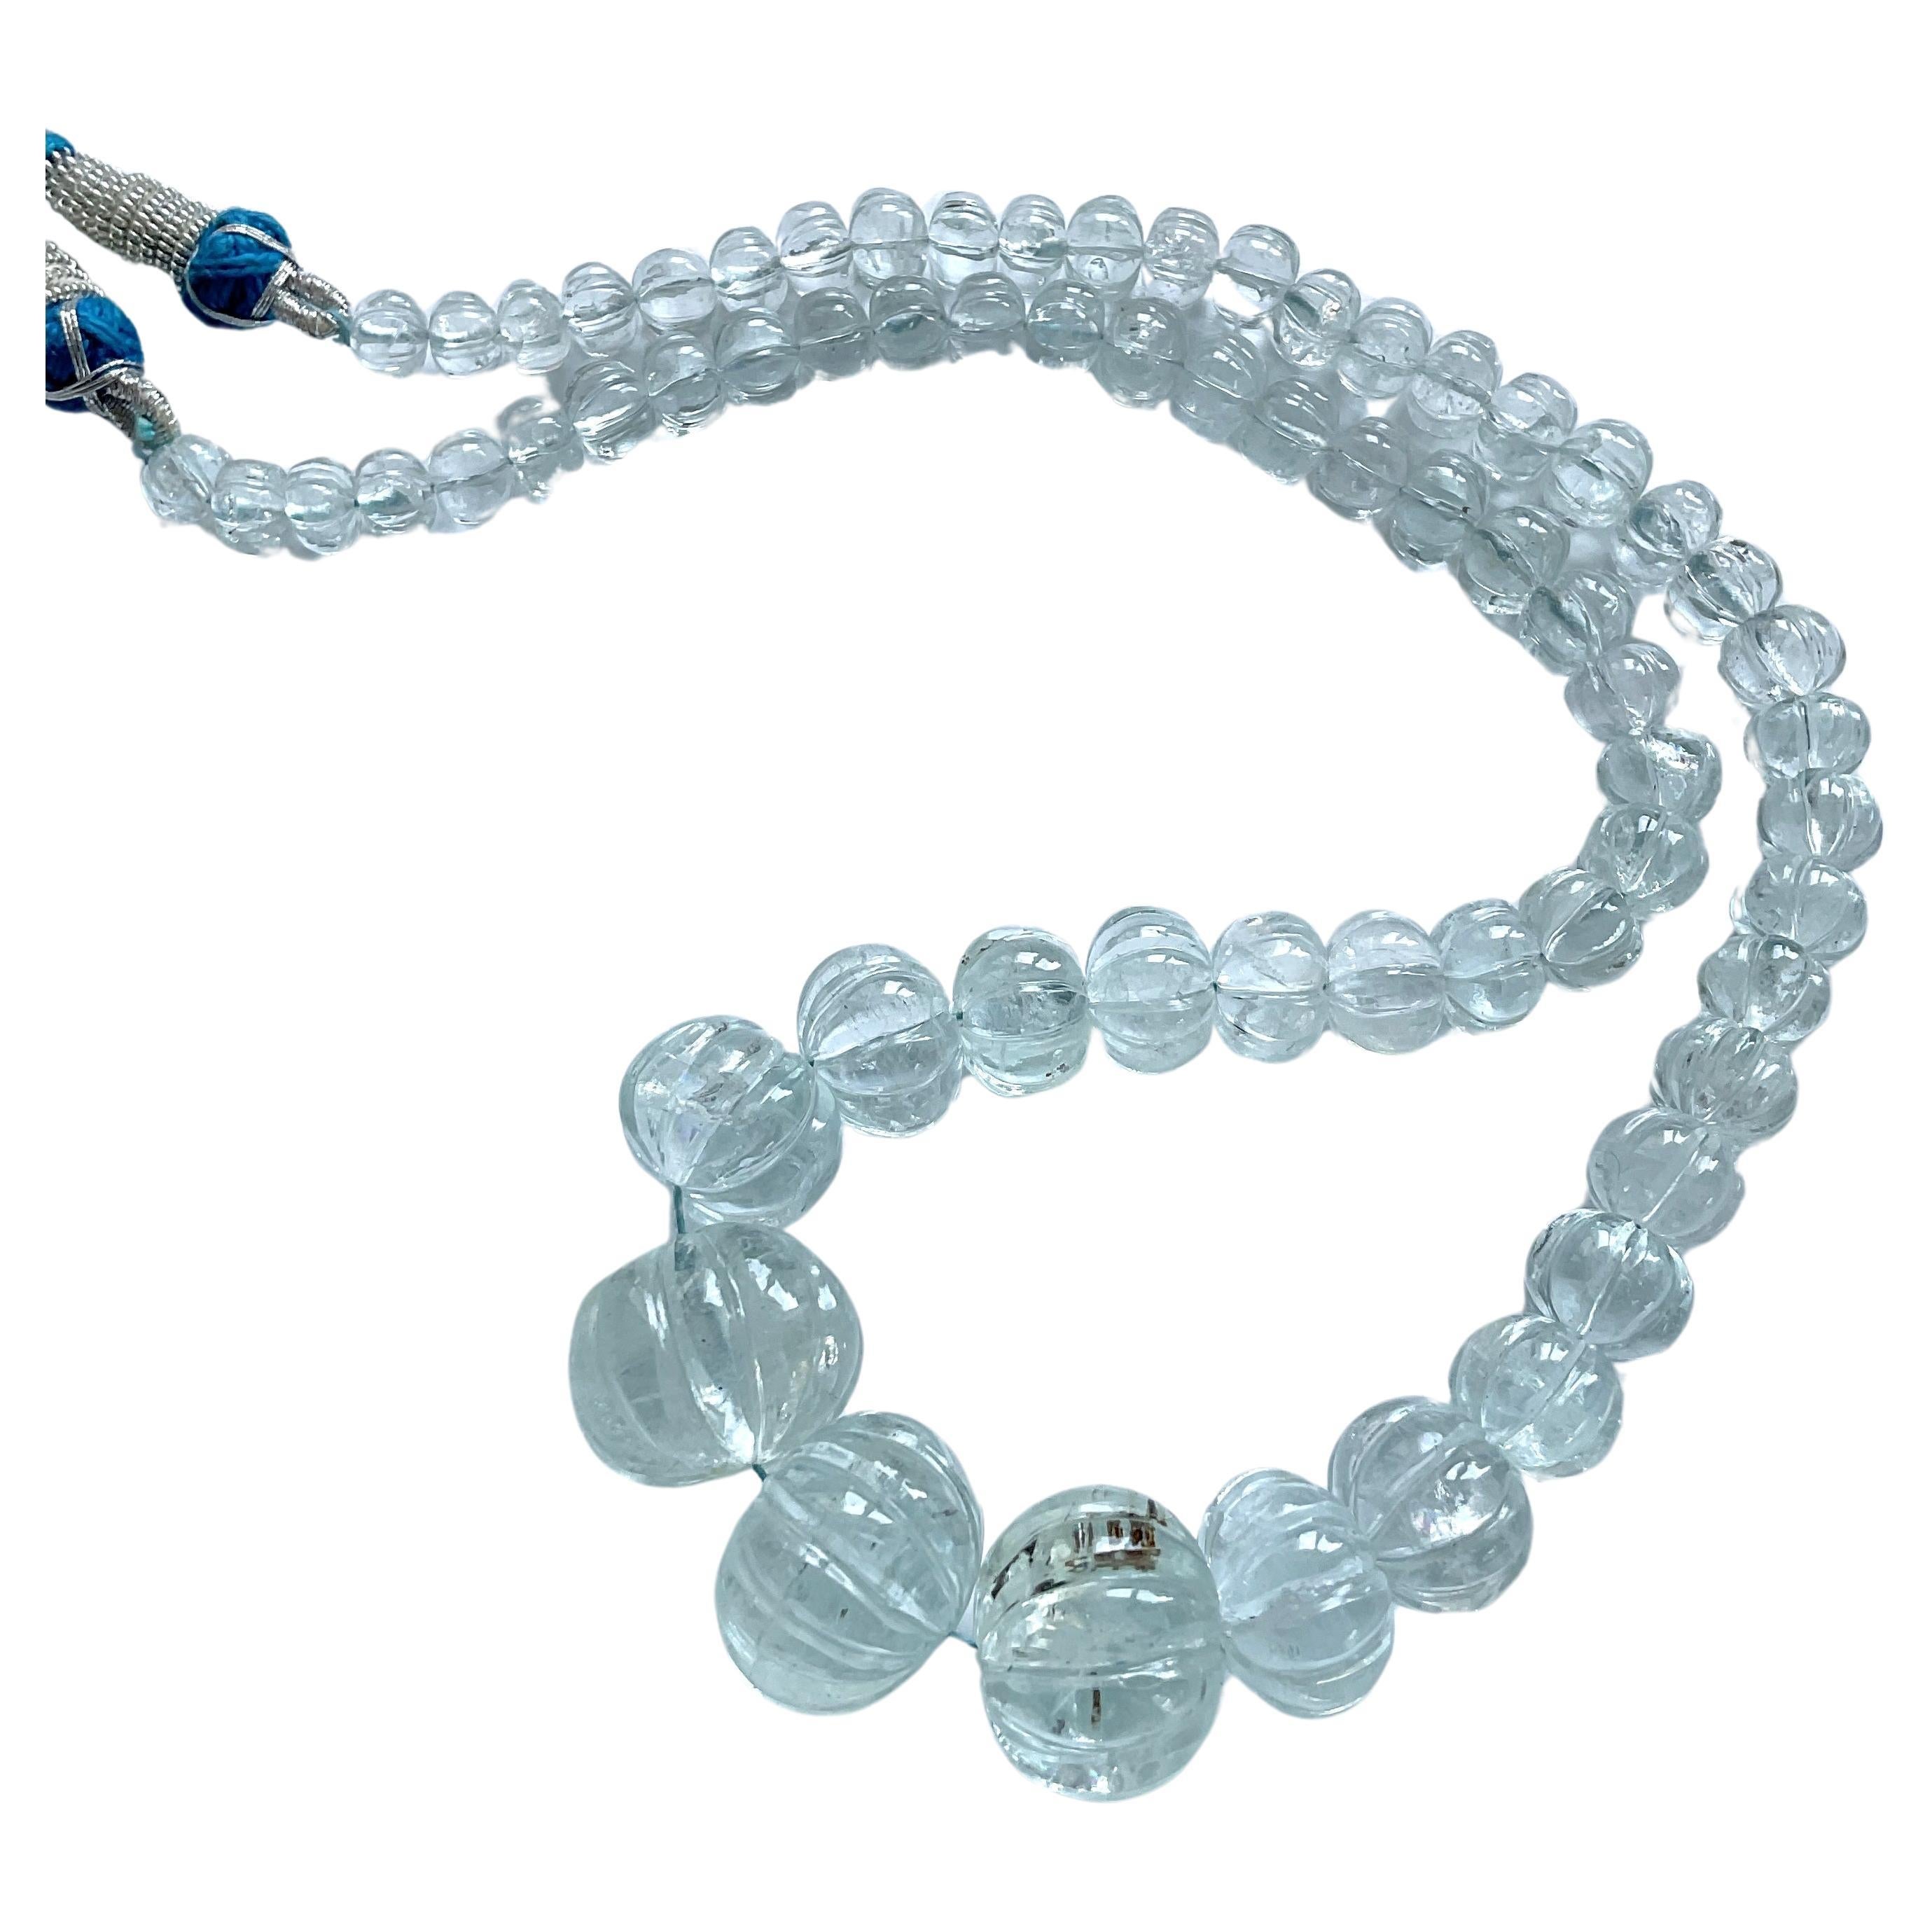 327.80 Carats Aquamarine Carved Melon Beads Necklace Natural Gemstone